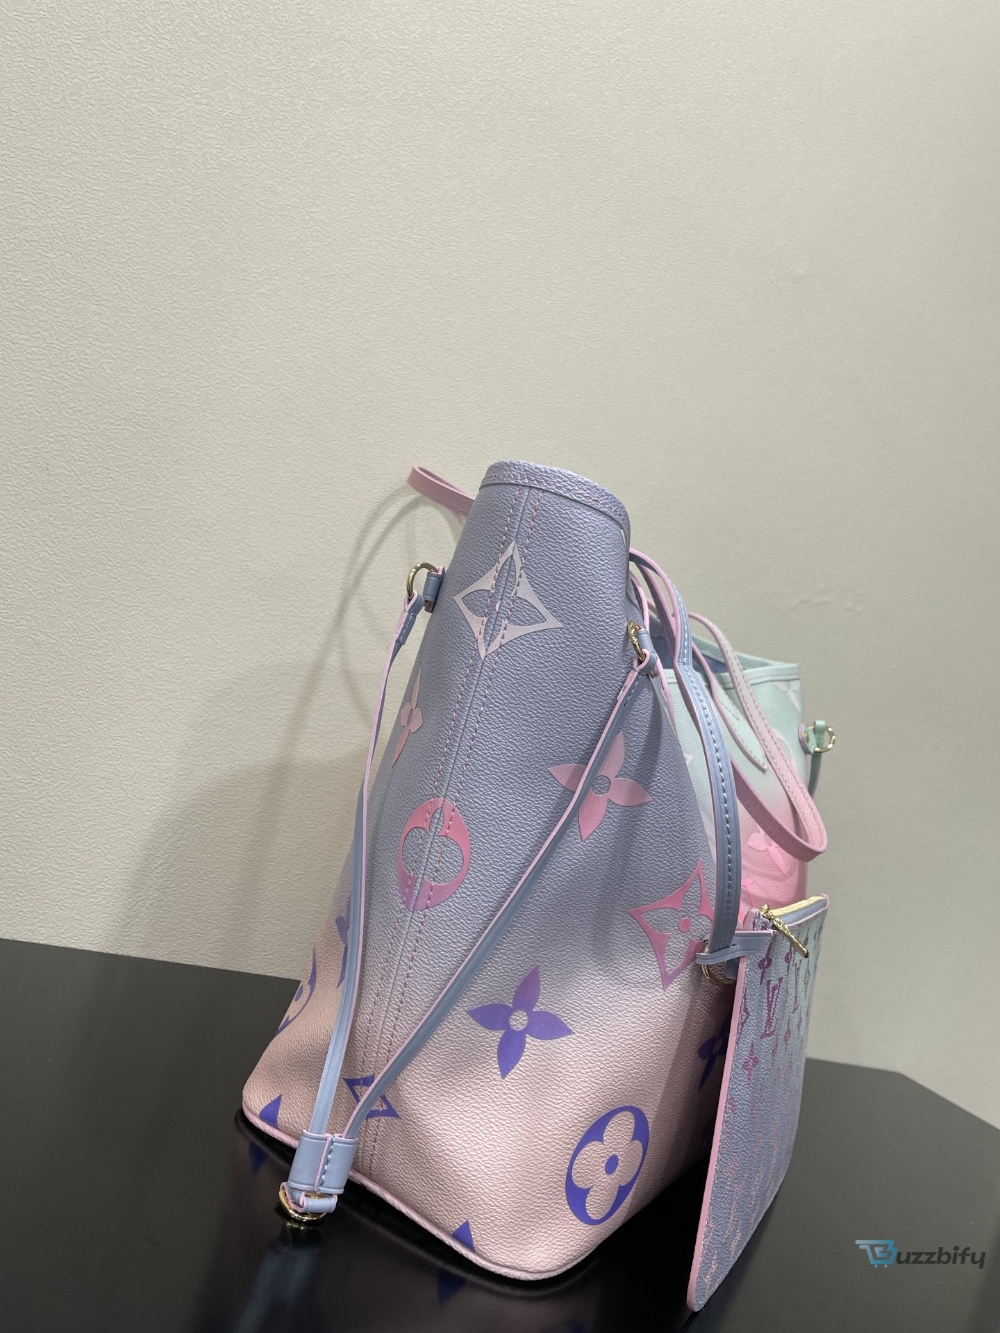 louis vuitton neverfull mm tote bag monogram canvas sunrise pastel for women womens handbags shoulder bags 122in31cm lv m46077 2799 buzzbify 1 2